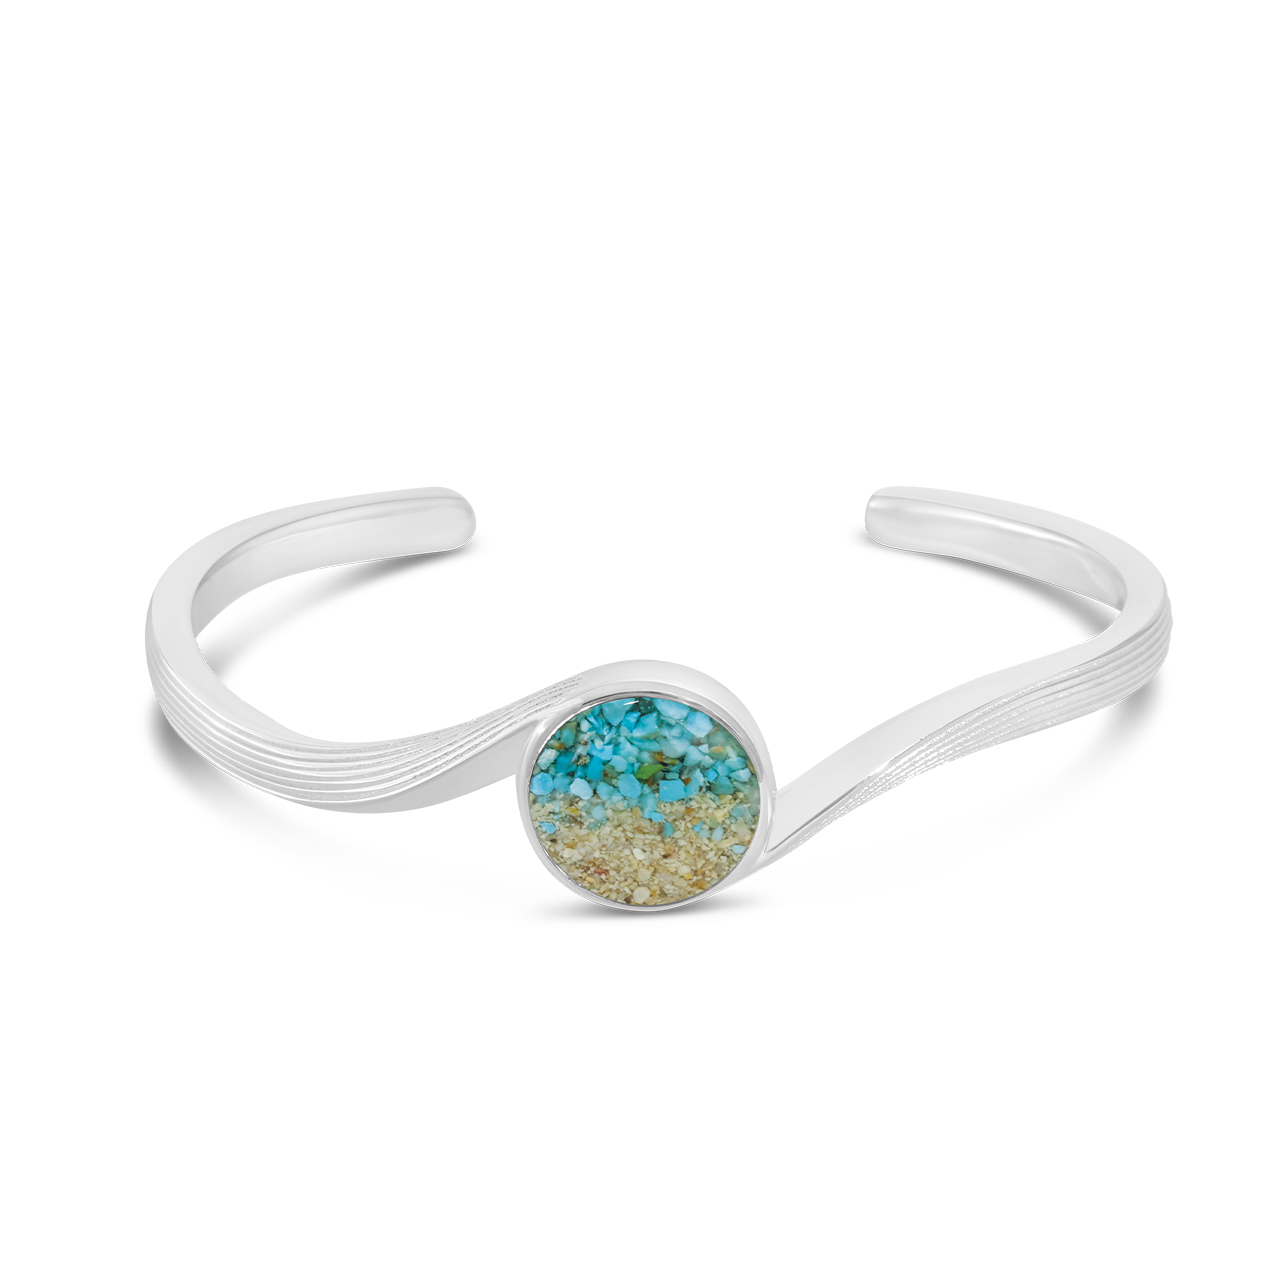 Image of Ocean Waves Cuff Bracelet - Turquoise Gradient